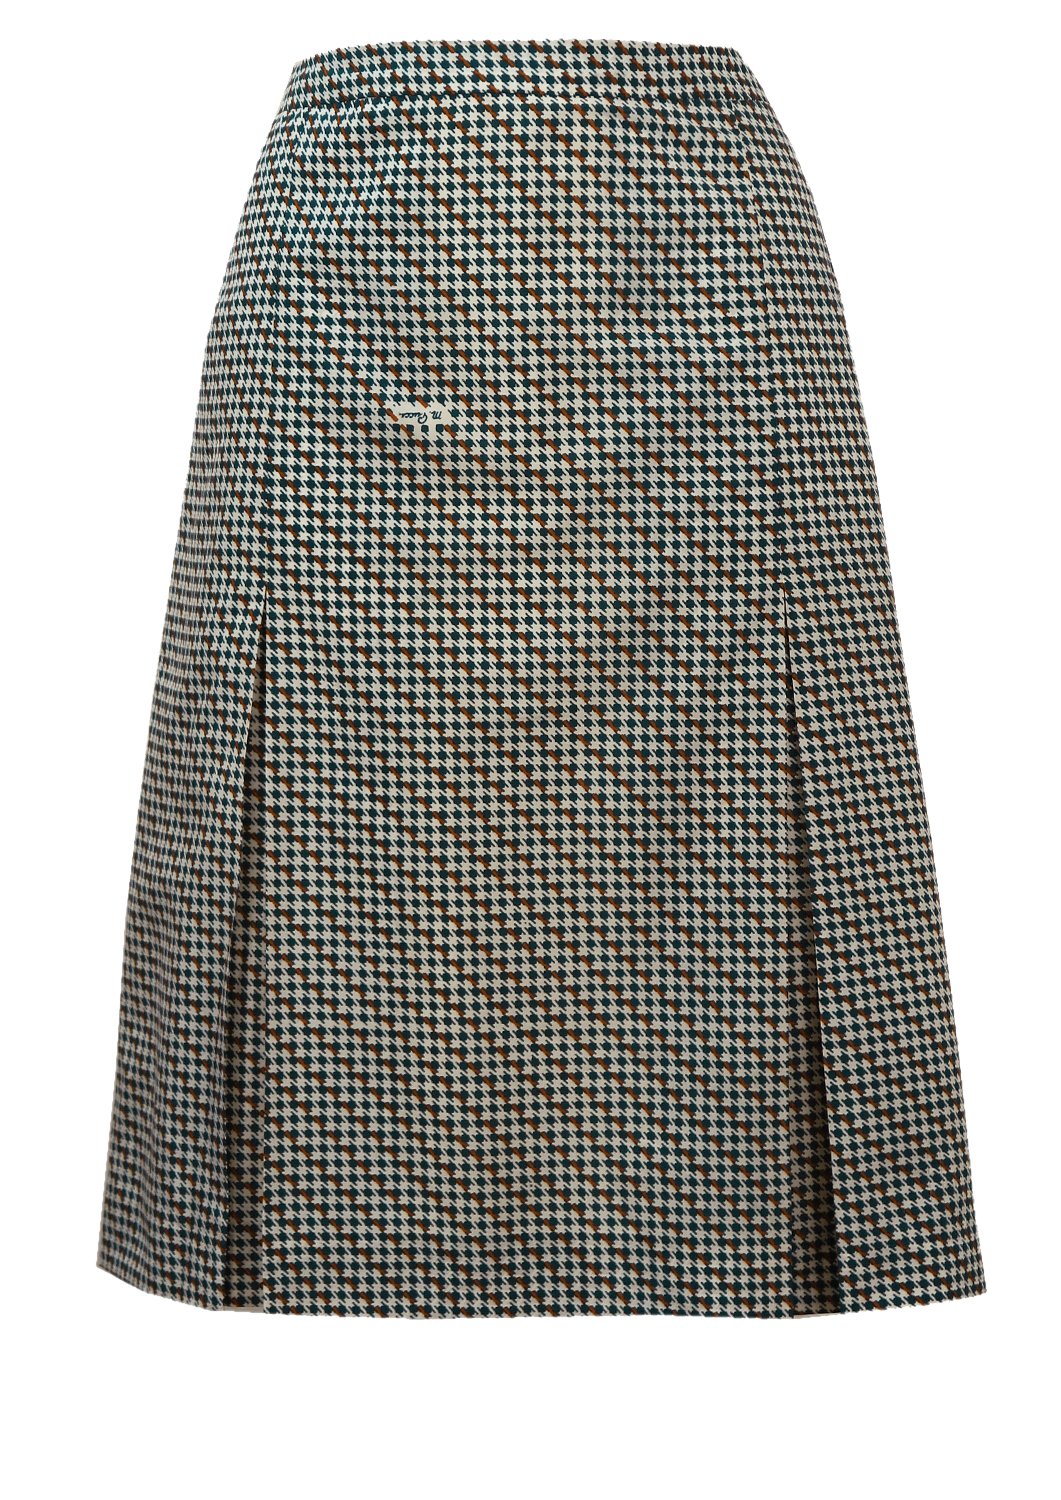 Vintage 1960's Blue & White Houndstooth Check Knee Length Skirt - L ...